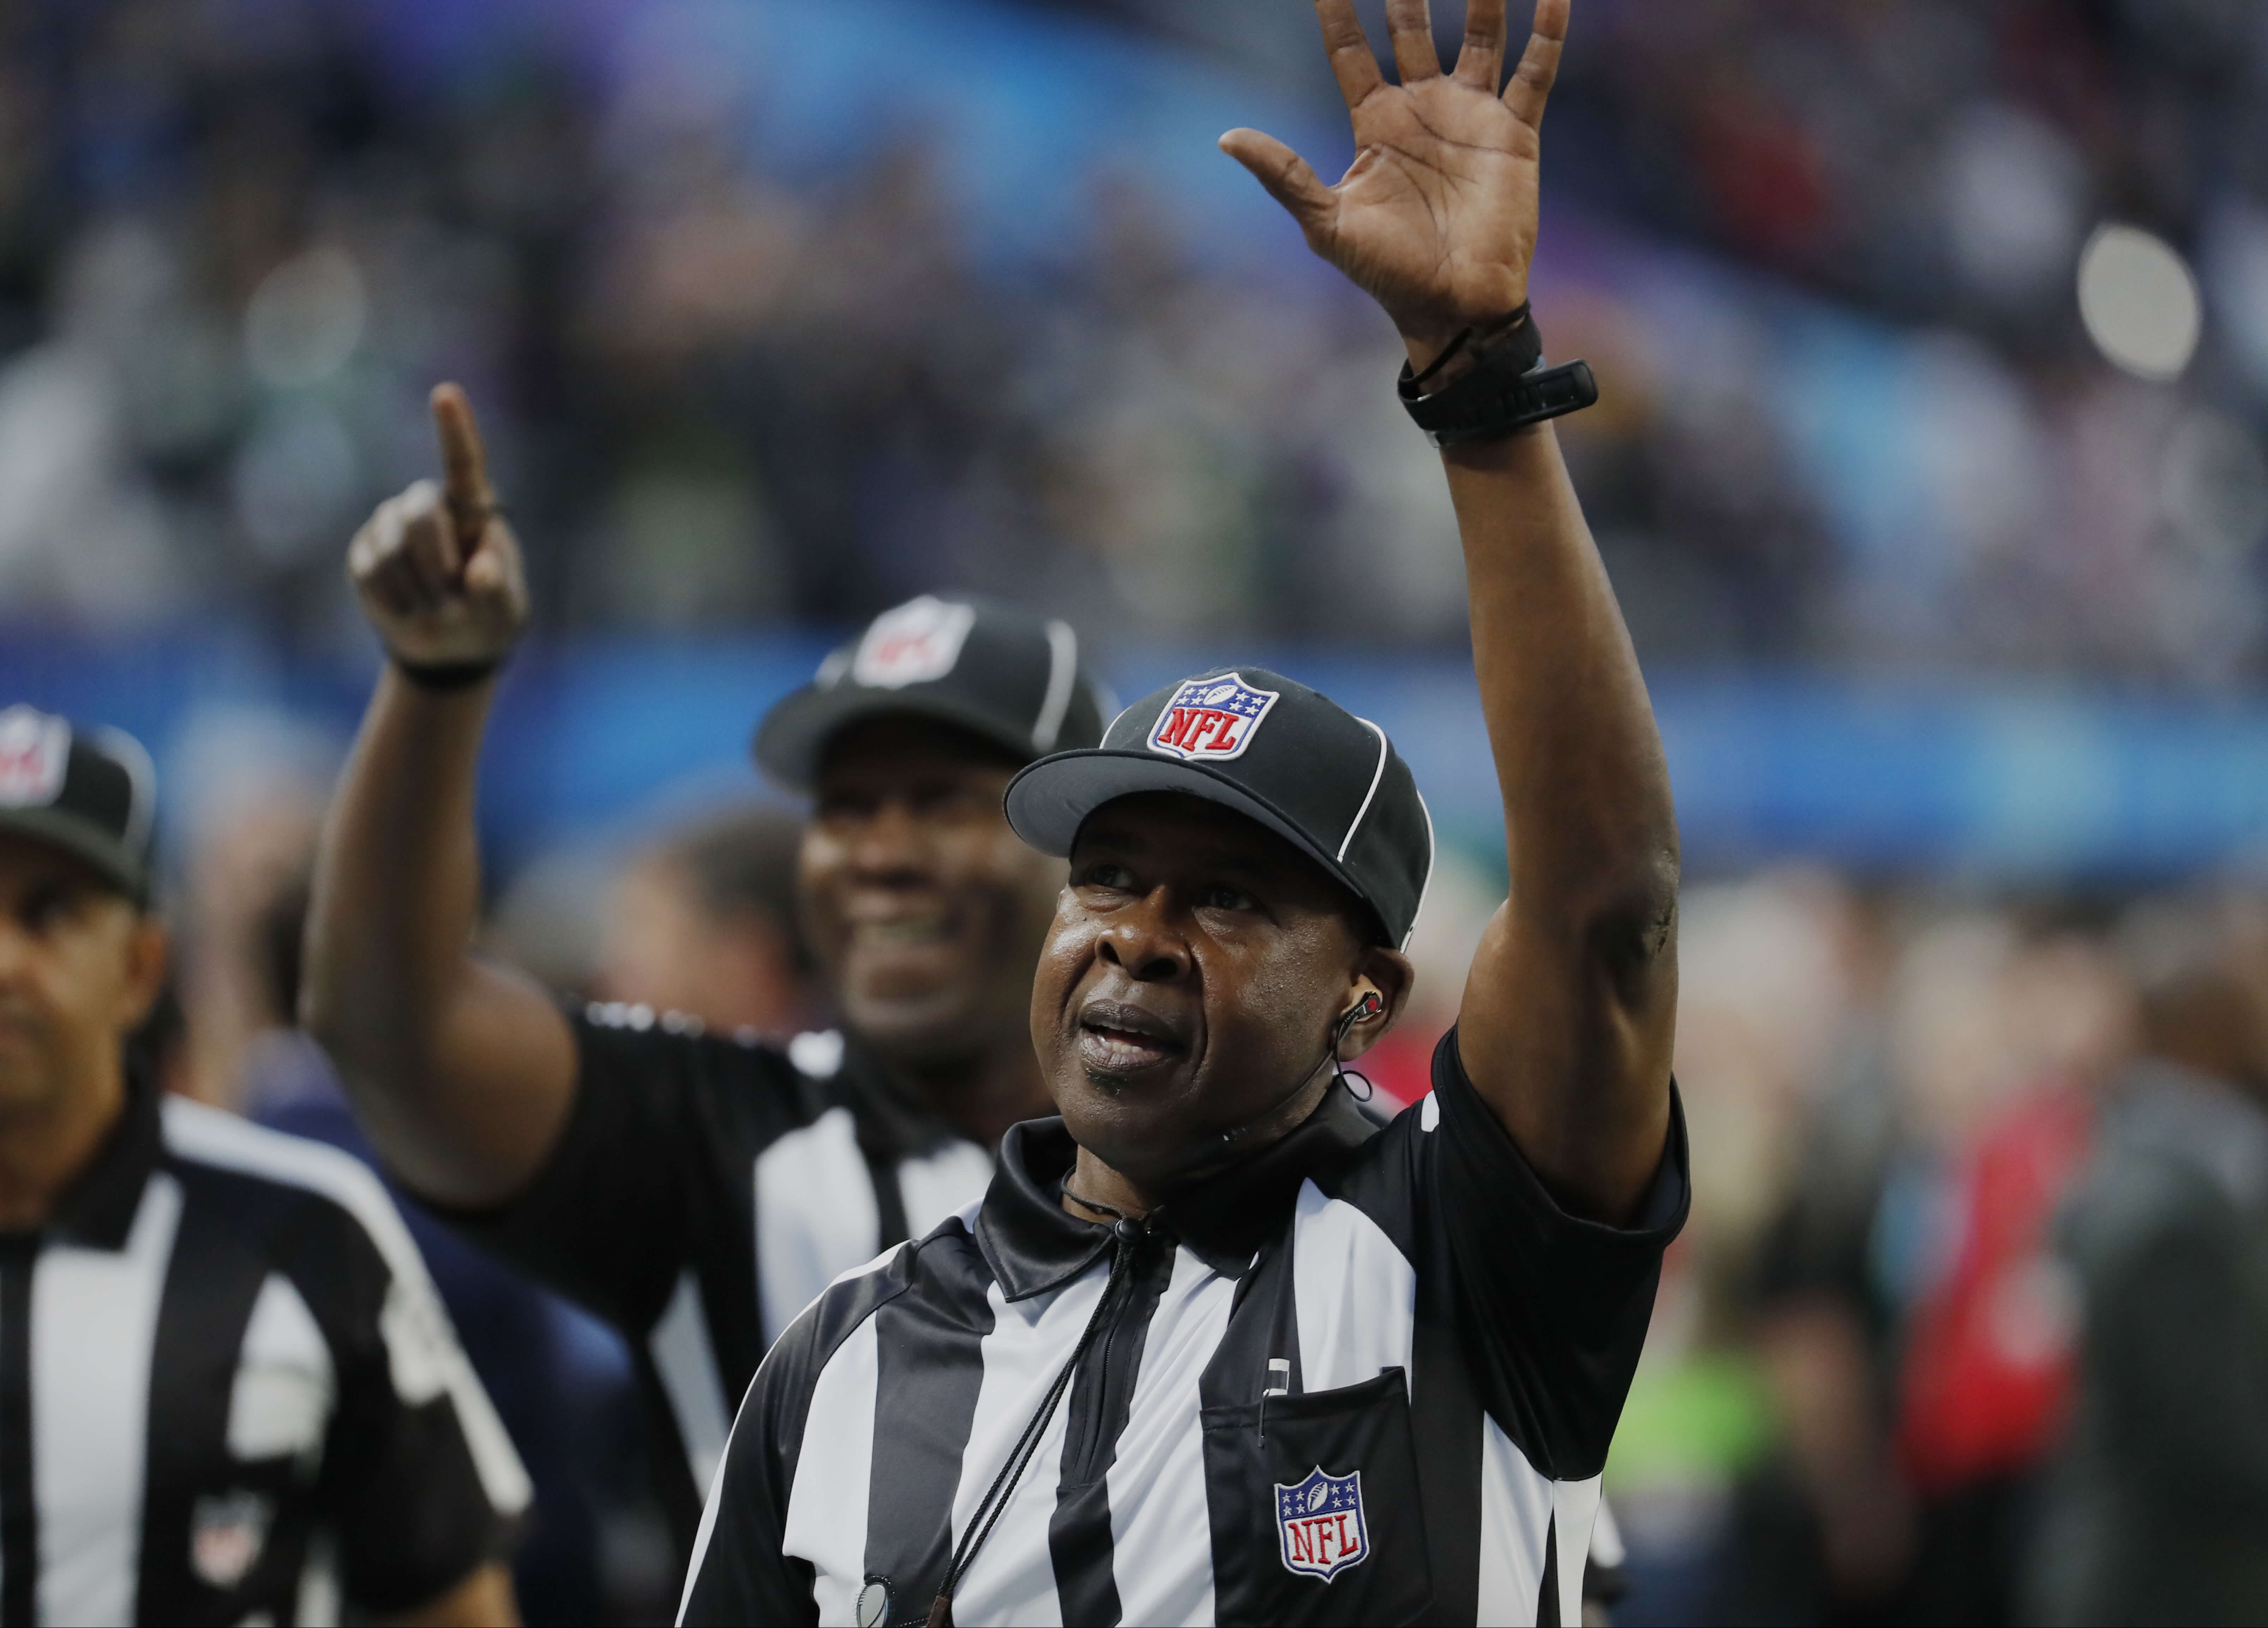 AP source: NFL fines umpire $9,300, reinstates him